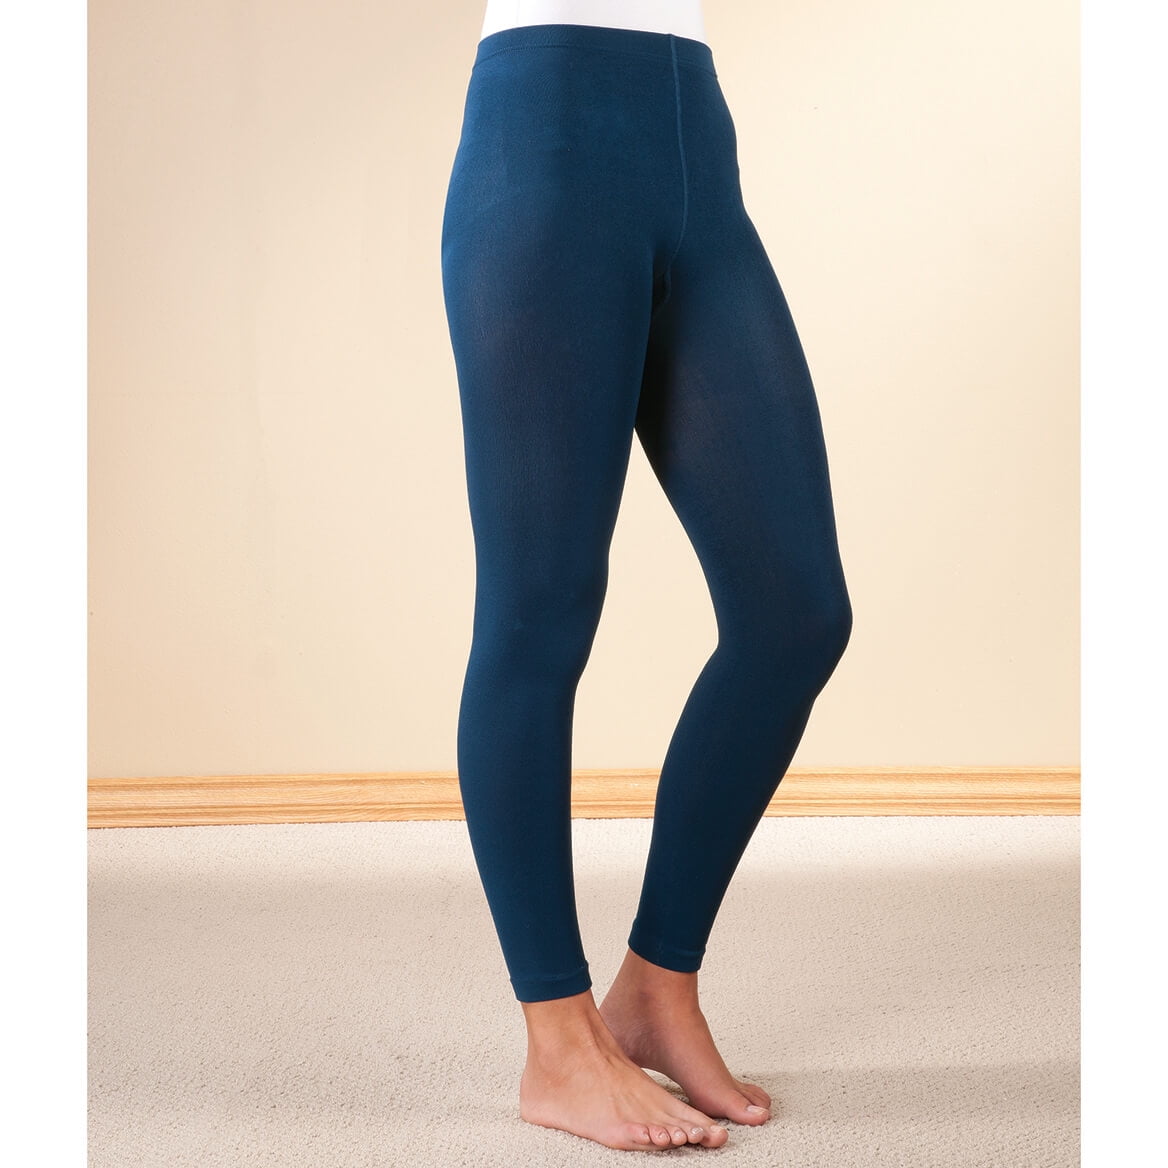 Elastic thermal leggings in dark blue, 6.99€